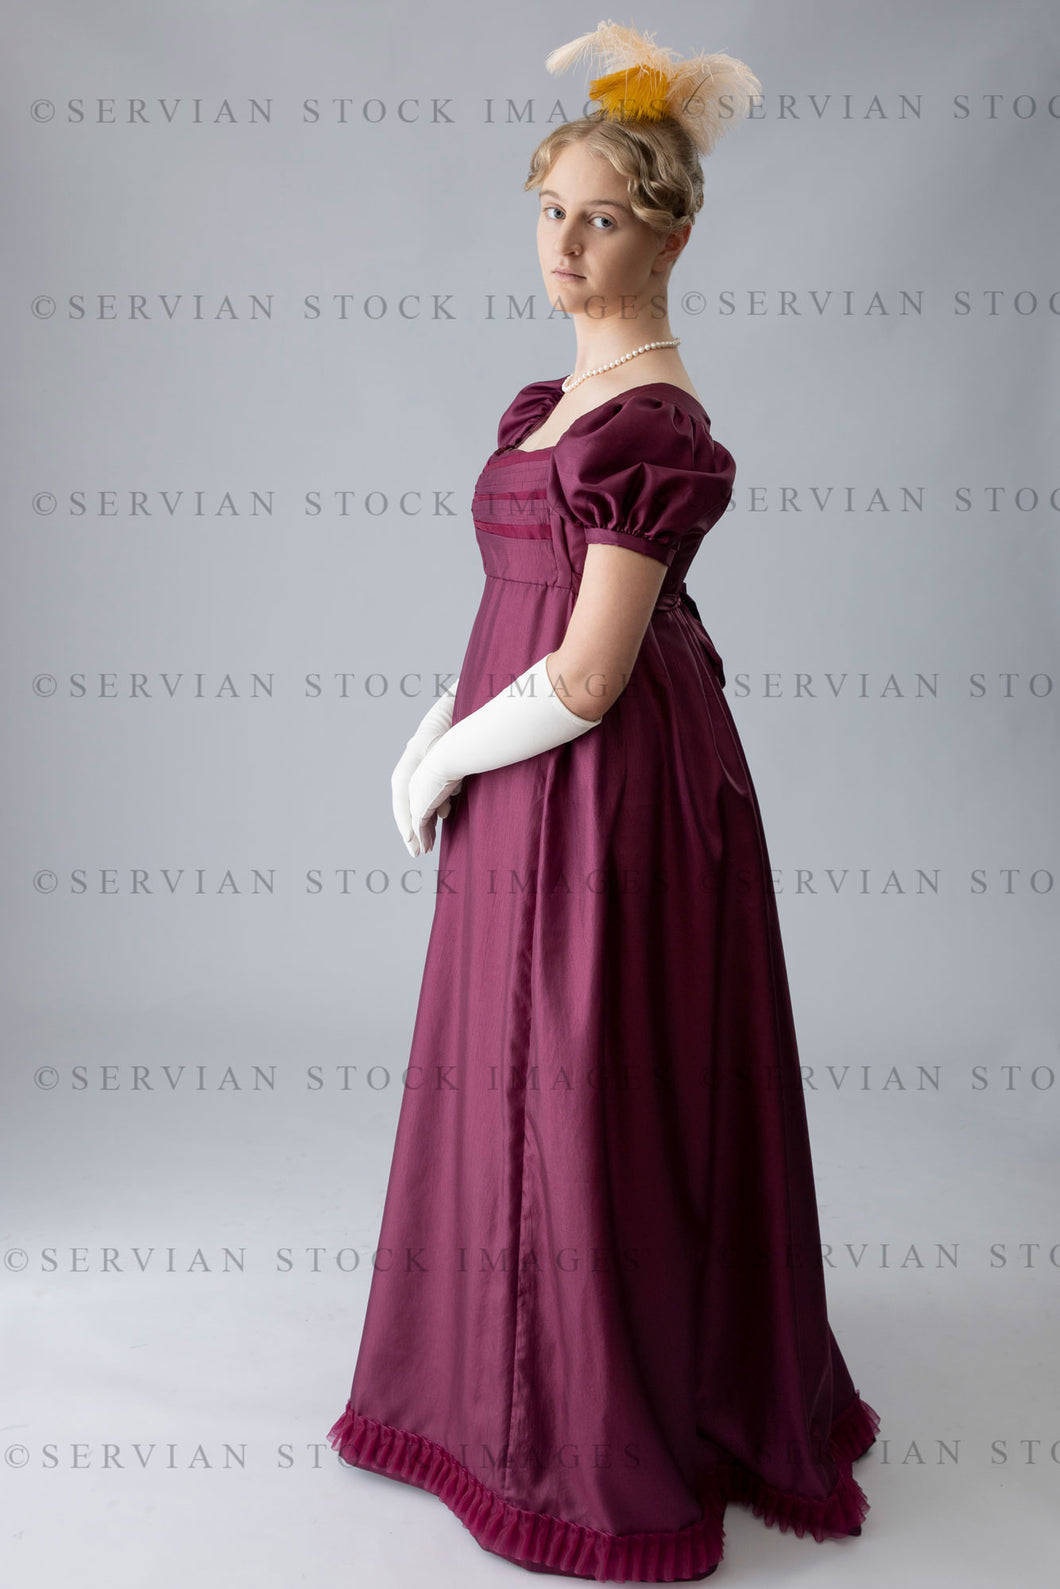 Regency woman in a red evening dress (Bianca 1534)